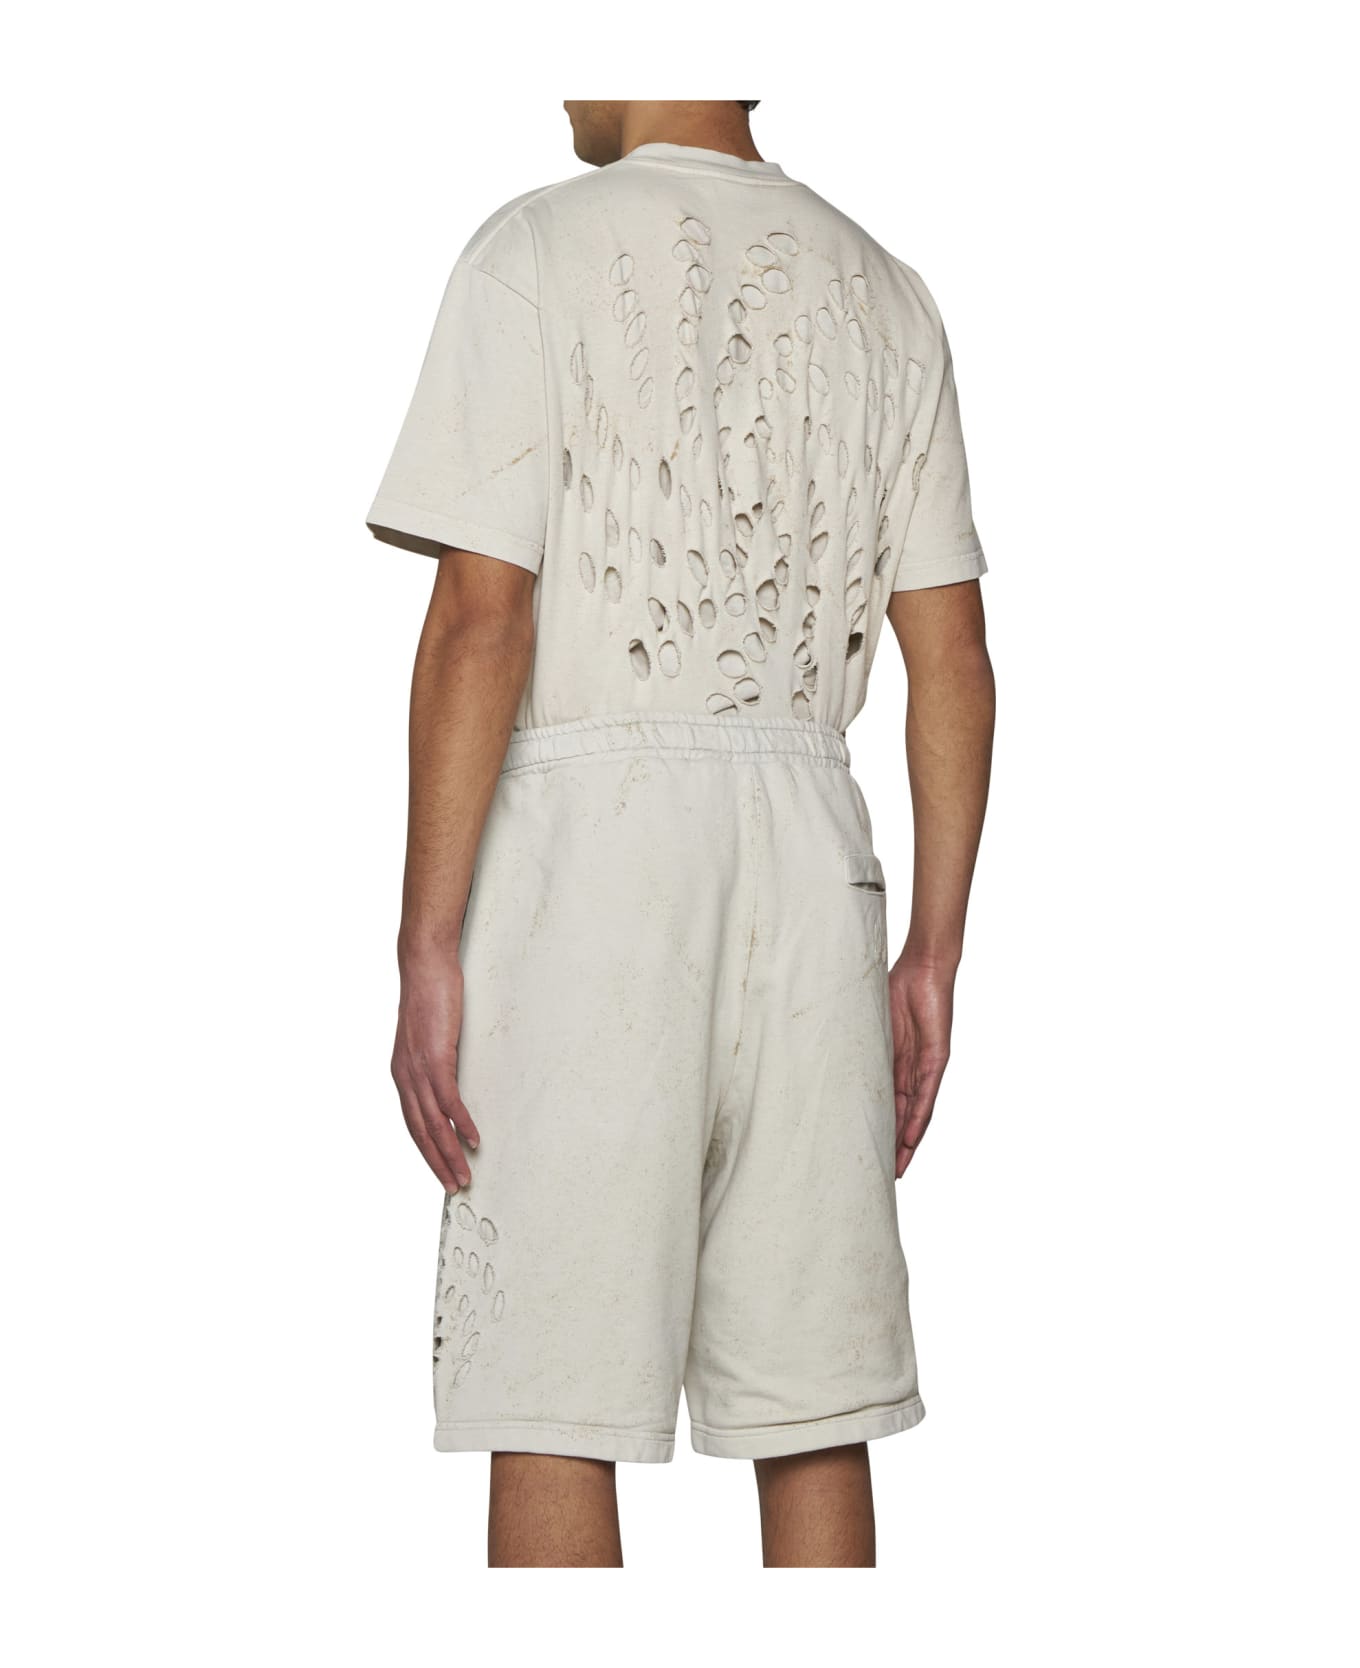 44 Label Group Shorts - Dirty white+gyps ショートパンツ